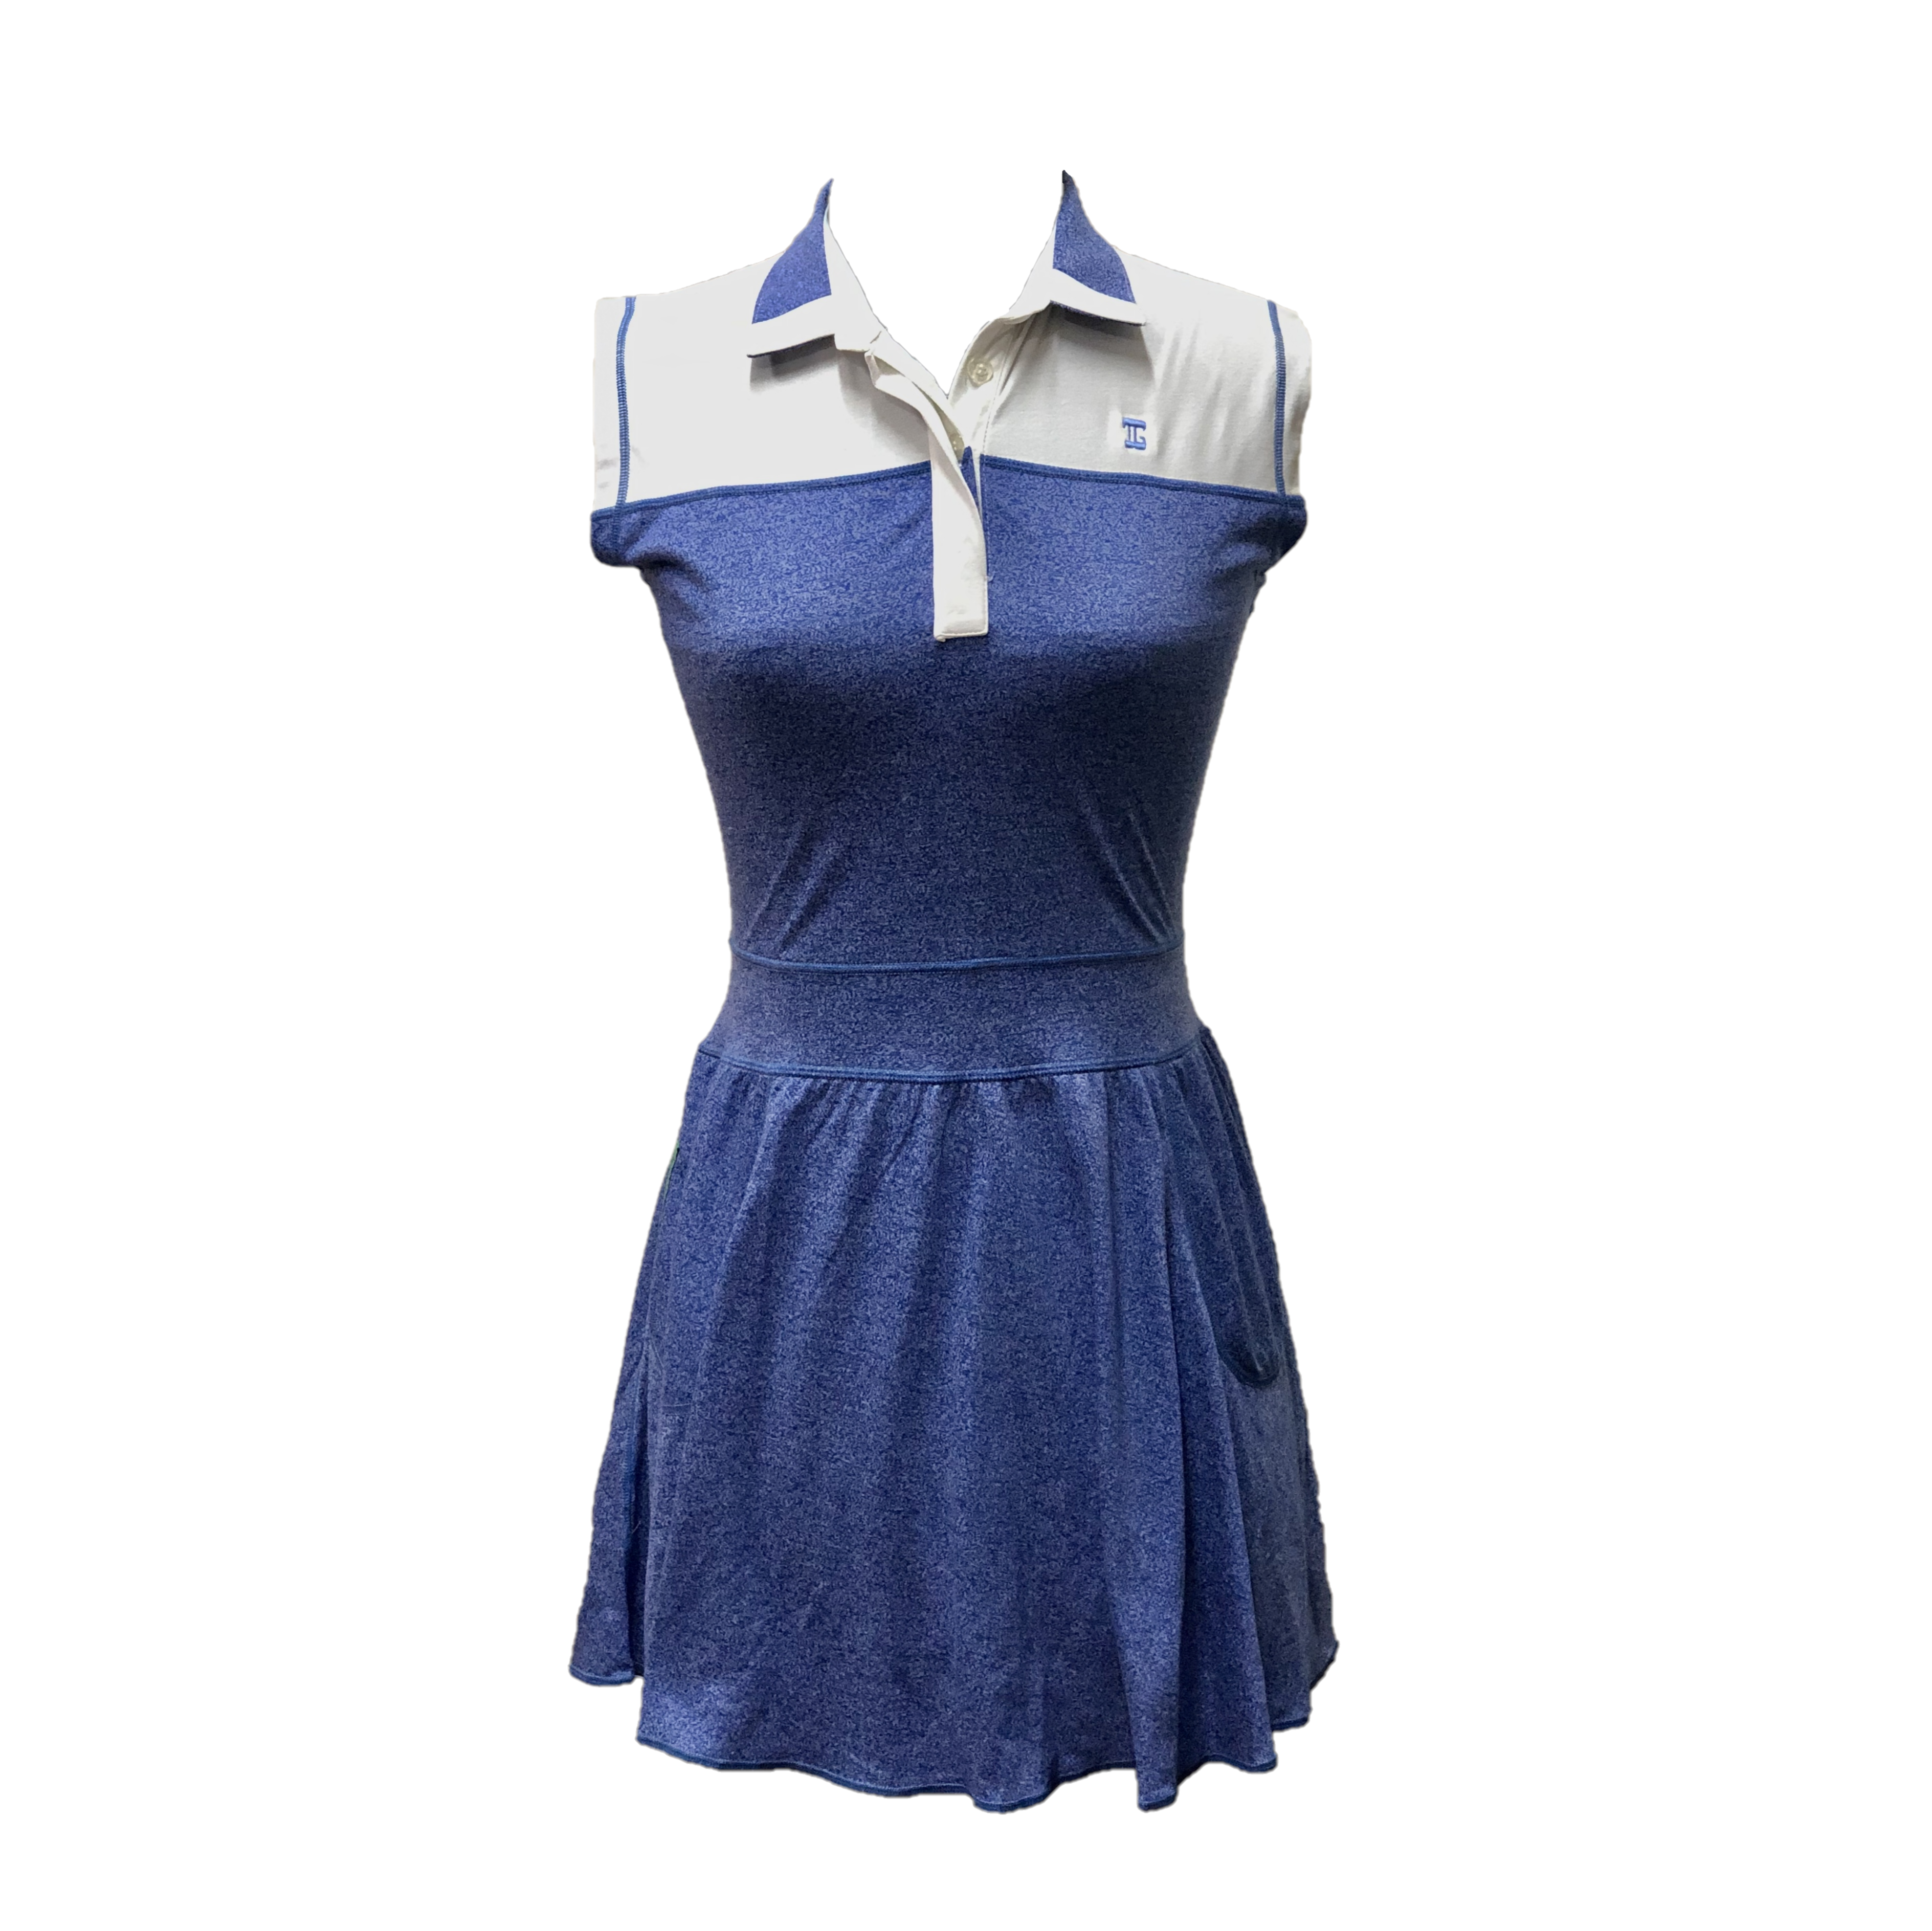 GD-013B || Golf Dress Sleeveless Blue Textured Cloth White Shoulder Panel and Blue & White Collar / Neck Trim